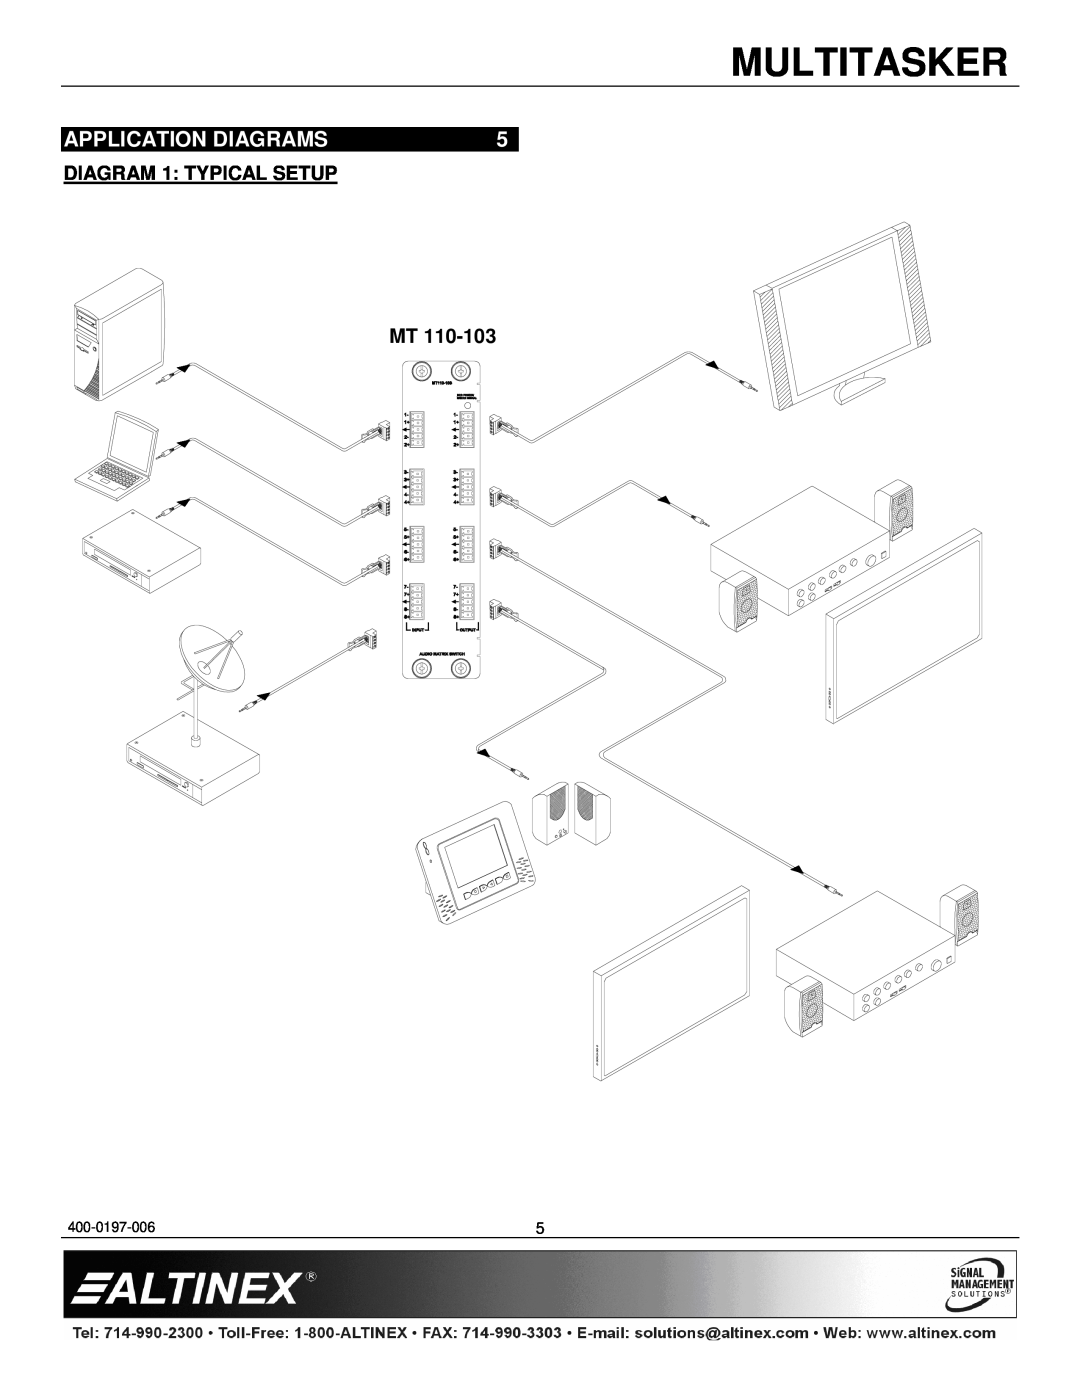 Altinex MT110-103 manual Application Diagrams, DIAGRAM 1 TYPICAL SETUP MT, Multitasker, 400-0197-006 